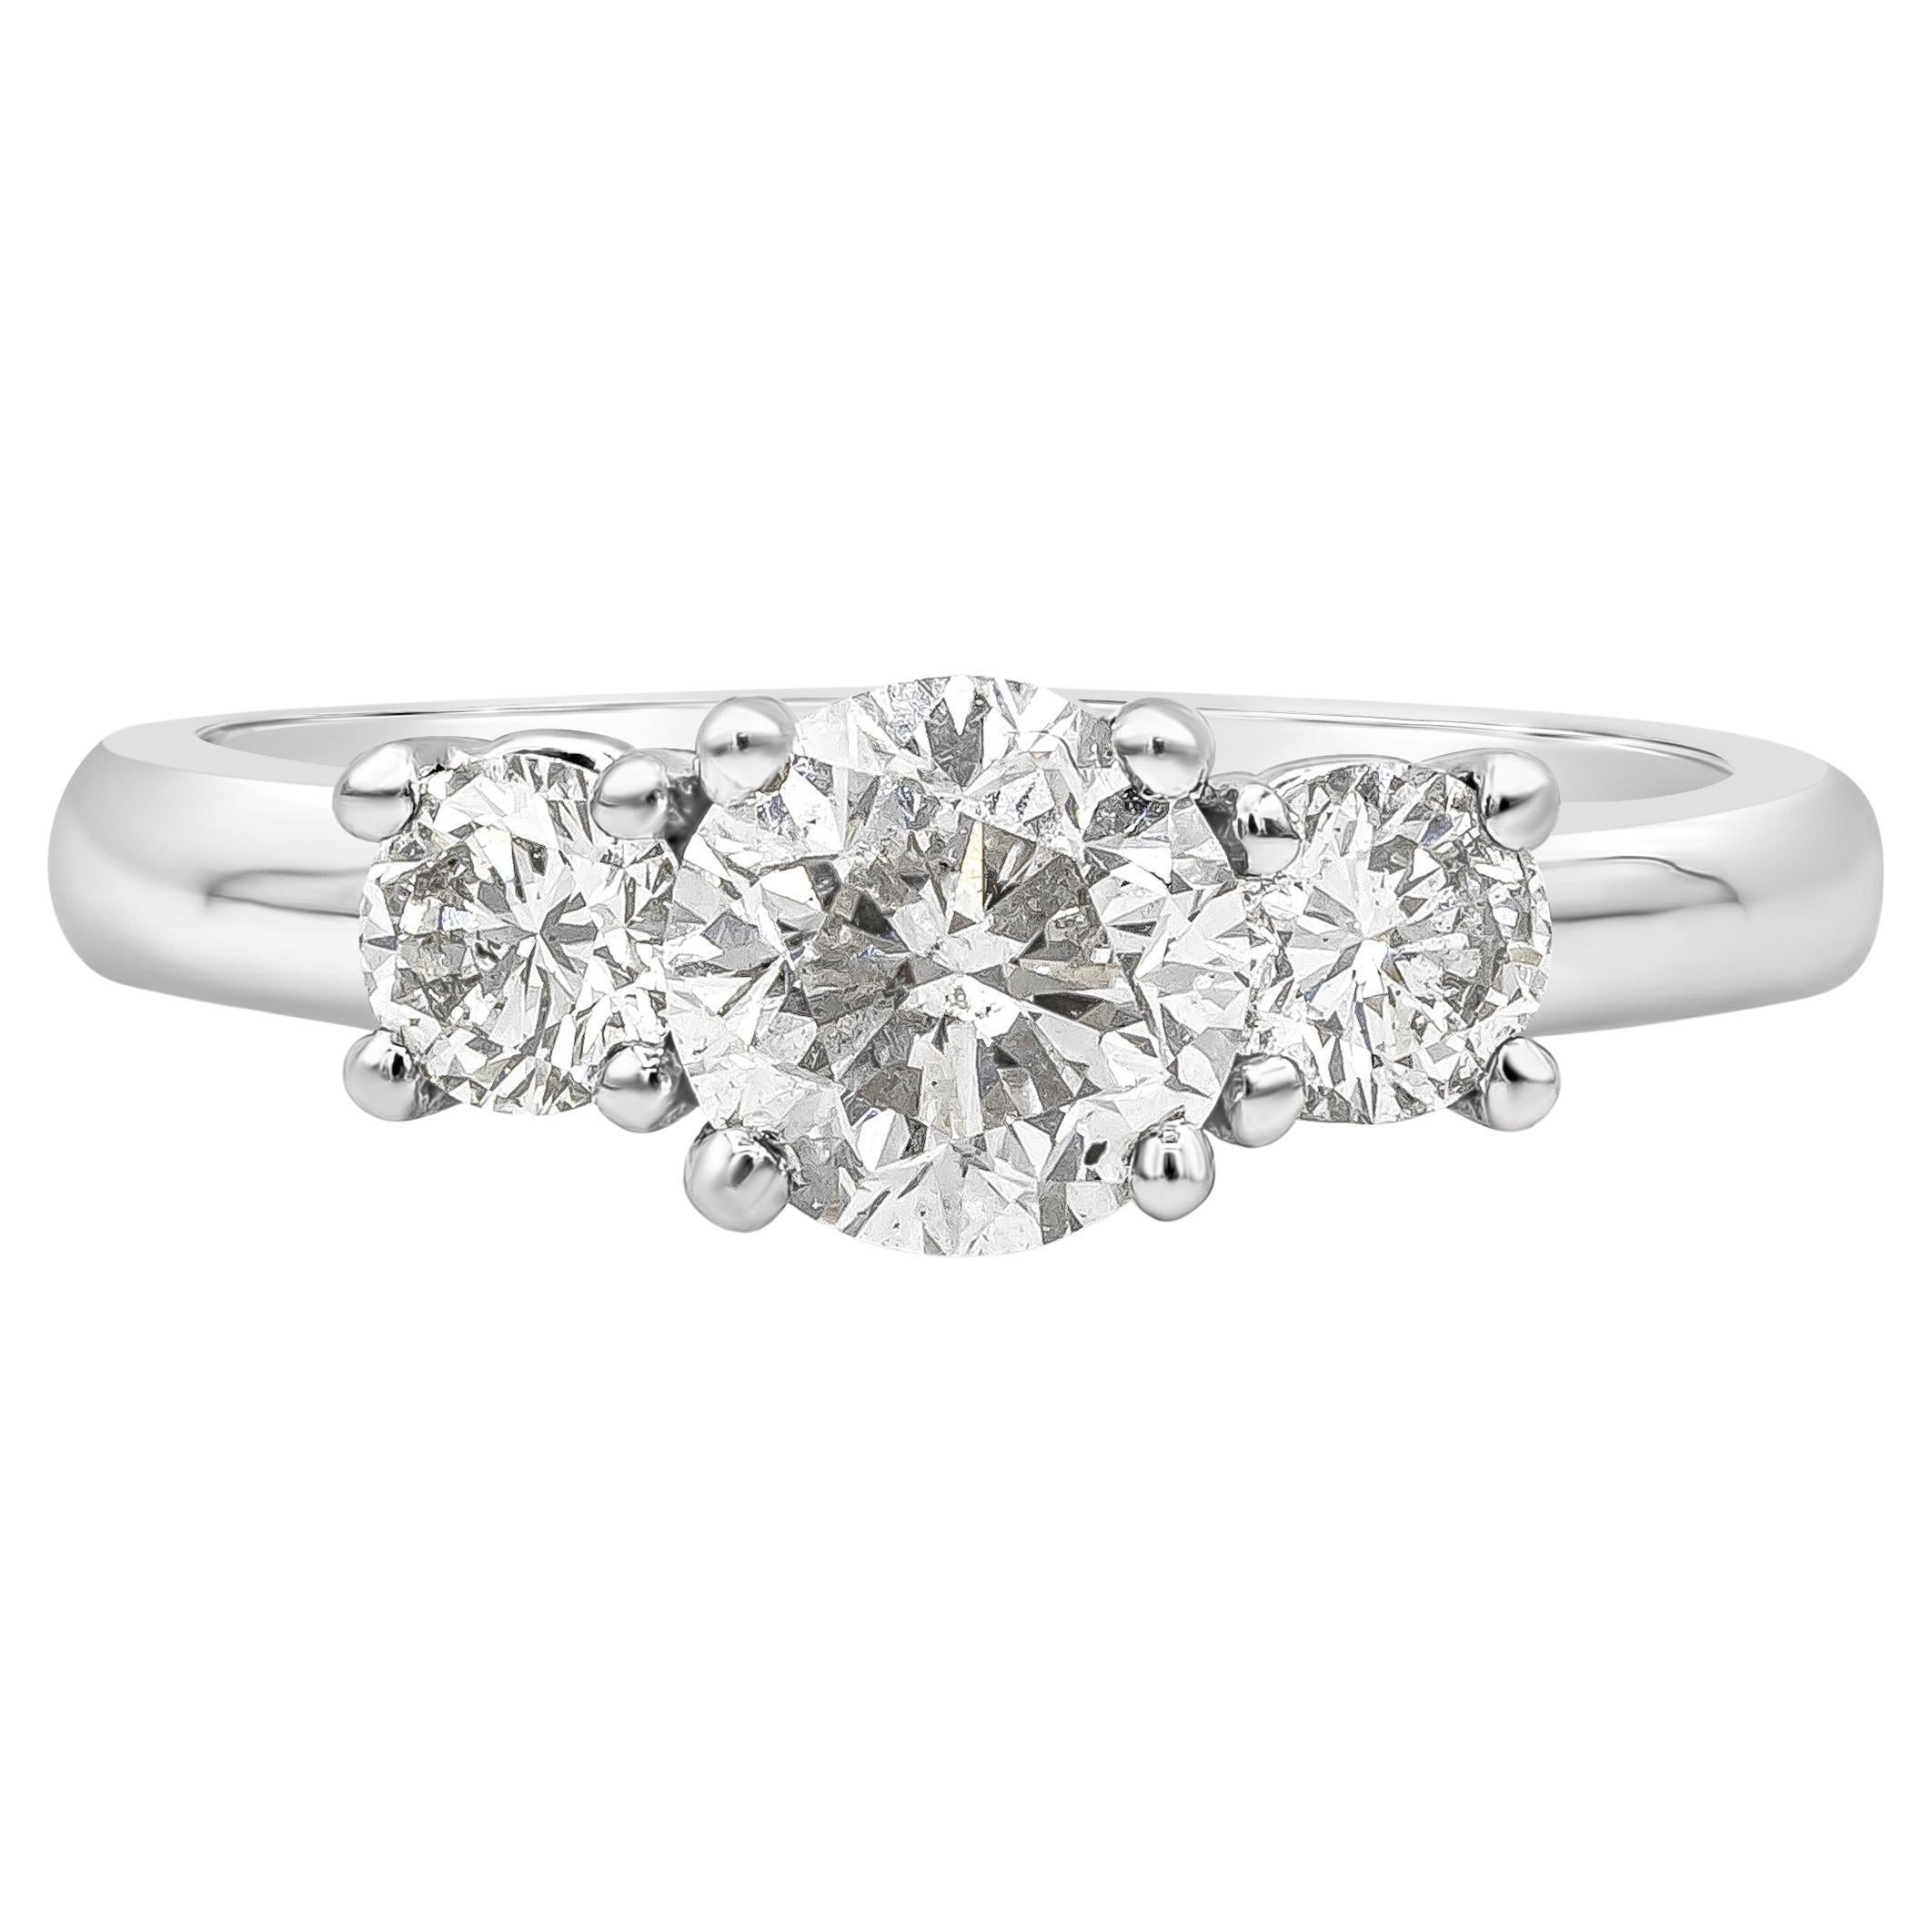 Roman Malakov 1.03 Carats Total Round Cut Diamond Three-Stone Engagement Ring